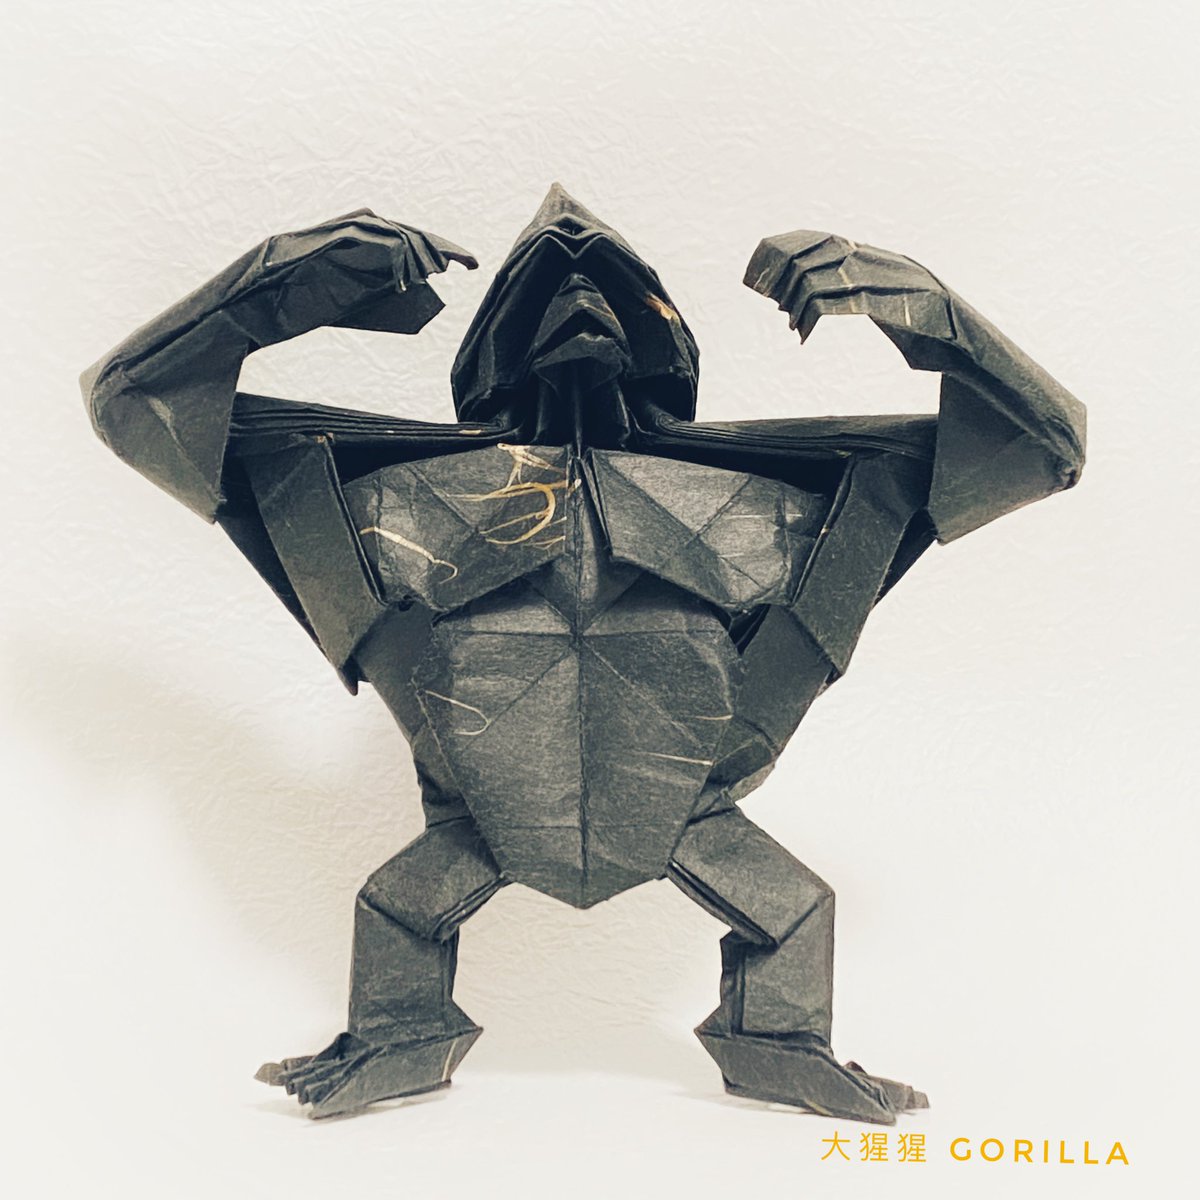 #gorilla 
Gorilla🦍 Kyohei Katsuta 
Uncut Squared Paper 50cm x 50cm 雲龍和紙

#origami #摺紙 #摺紙藝術 #折り紙 #折り紙アート #折り紙リース #折り紙作品 #origamichallenge #origamicharacter #origamipeople #origamianimal #katsutakyohei #kyoheikatsuta